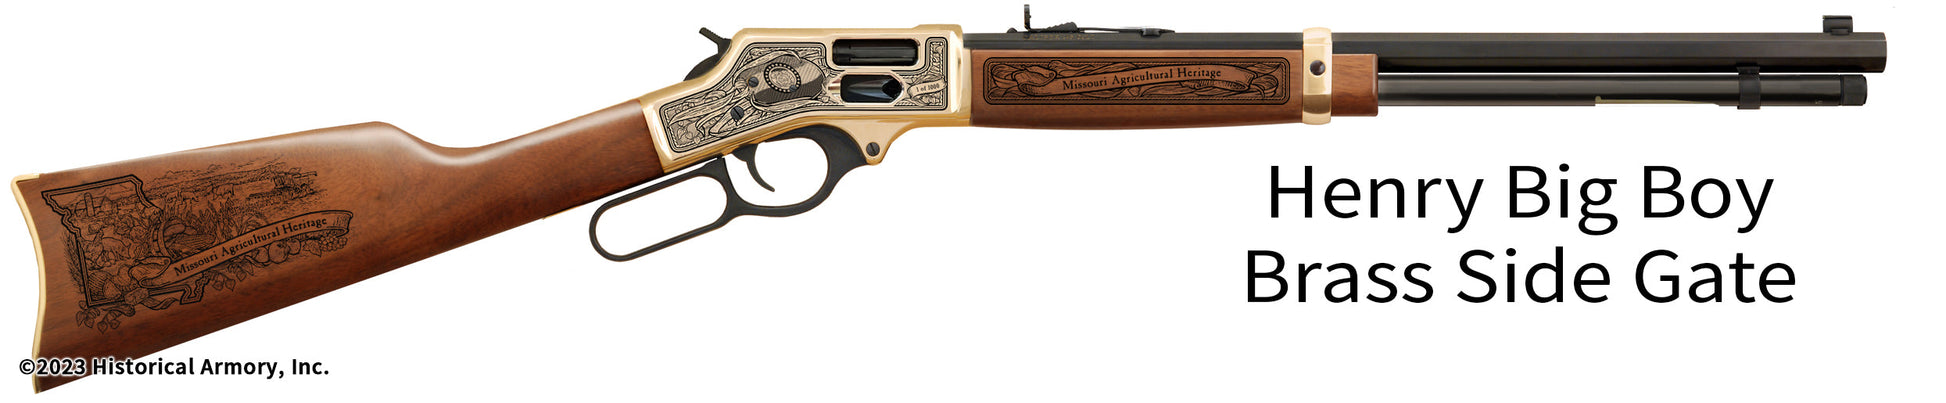 Missouri Agricultural Heritage Engraved Henry Big Boy Brass Side Gate Rifle